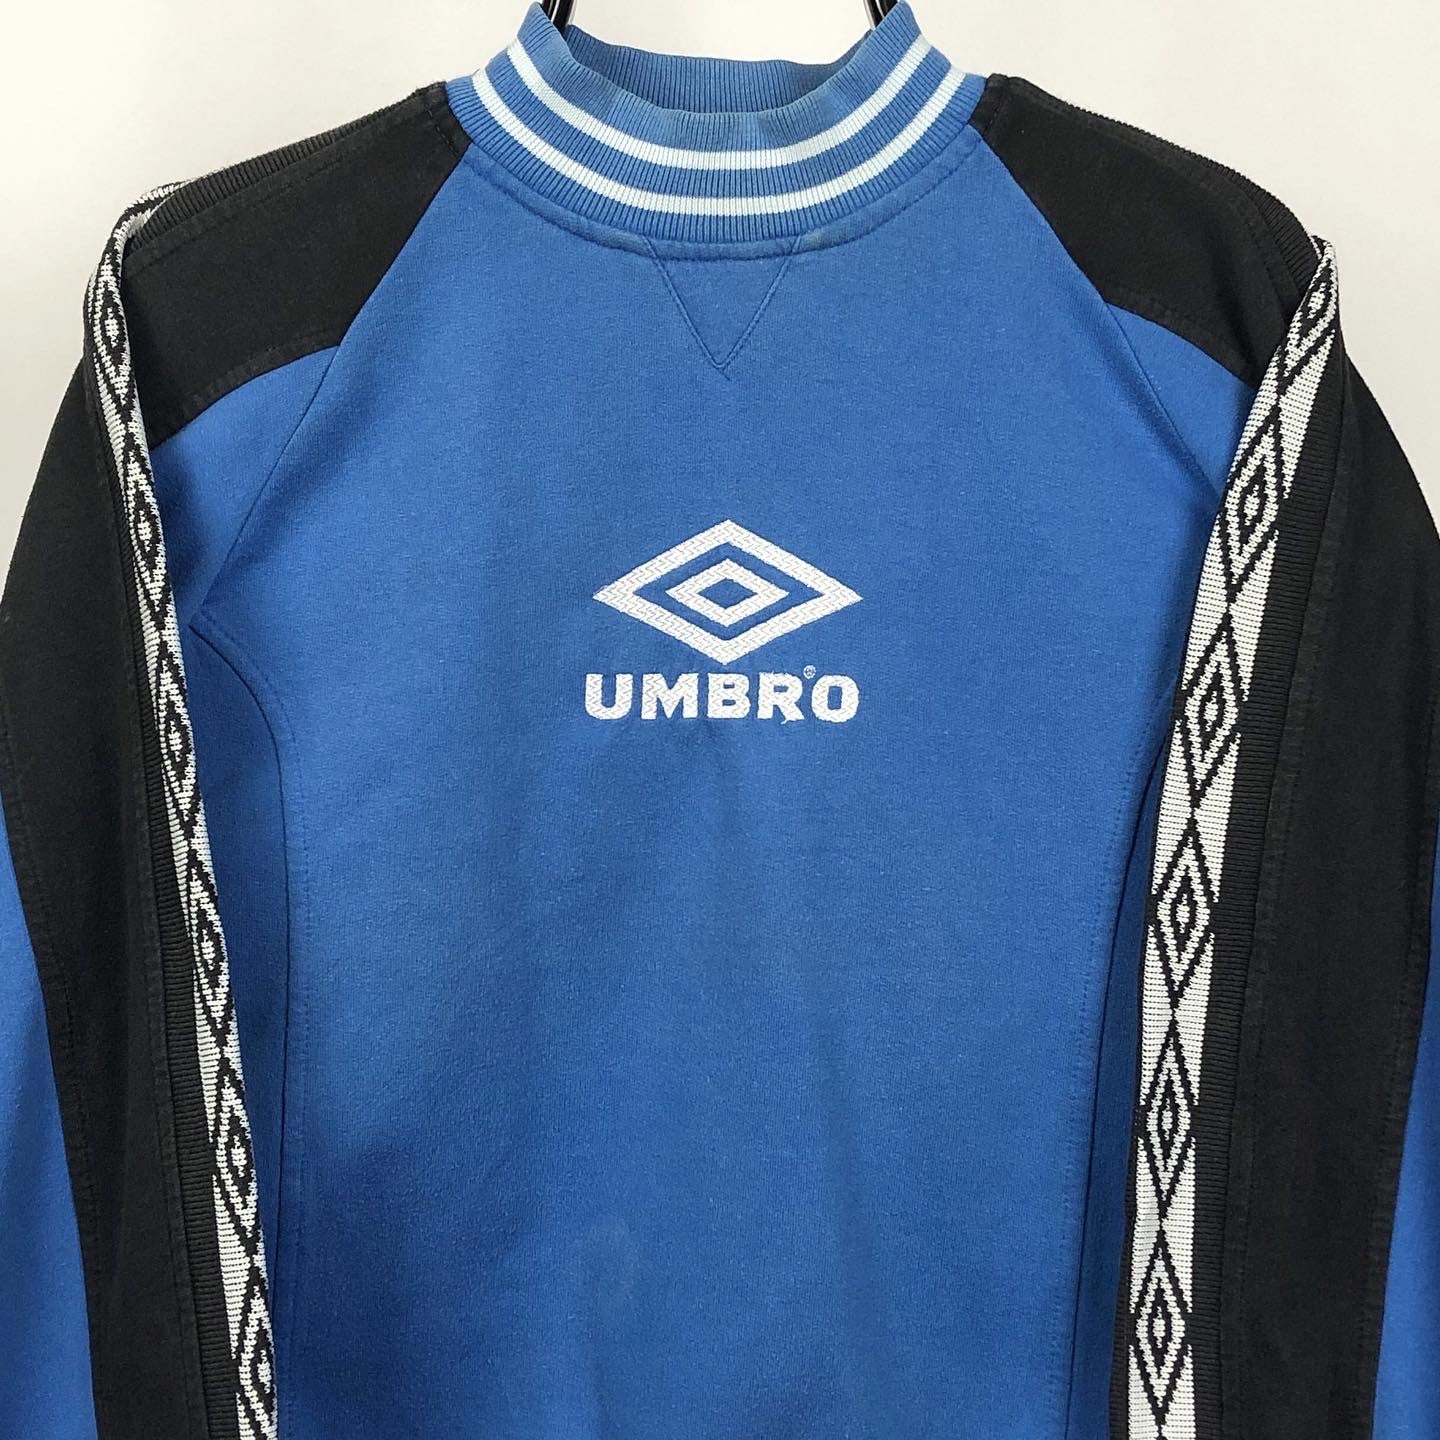 Umbro Sweatshirt in Royal Blue - Men's XS/Women's Small